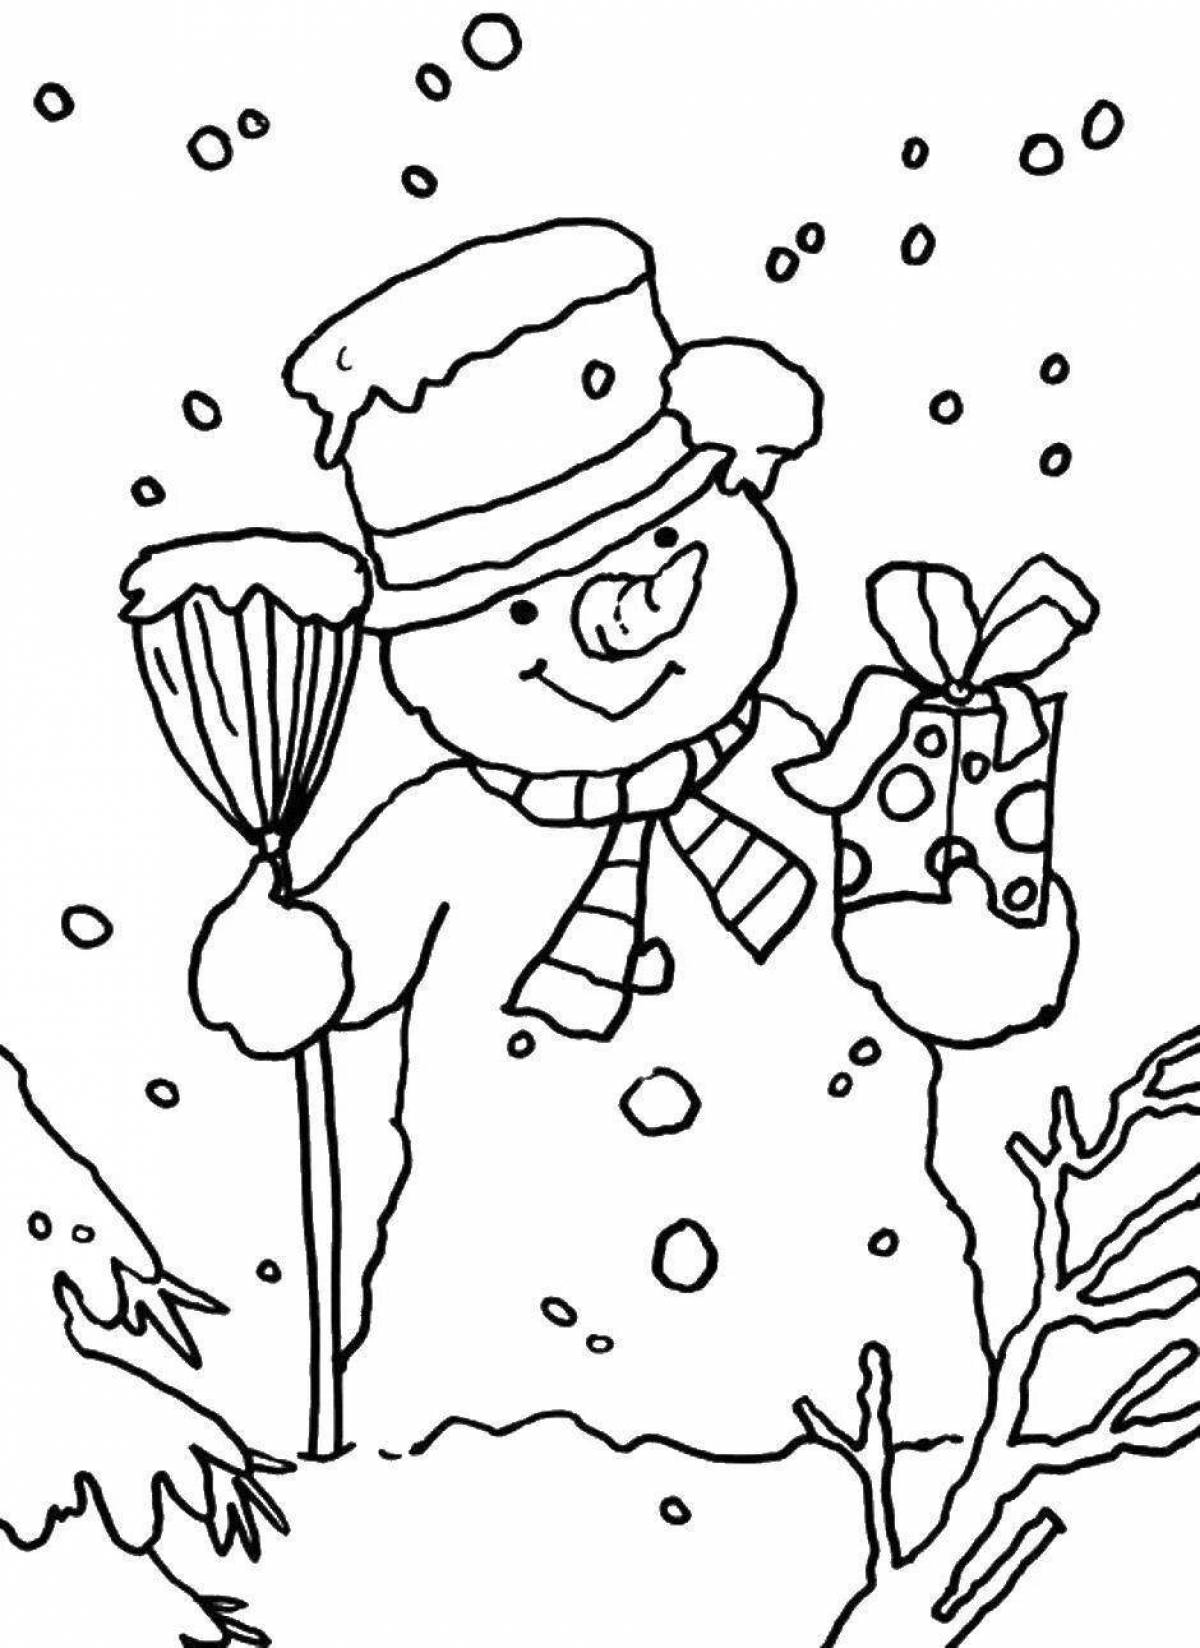 Креативная снежная раскраска для детей